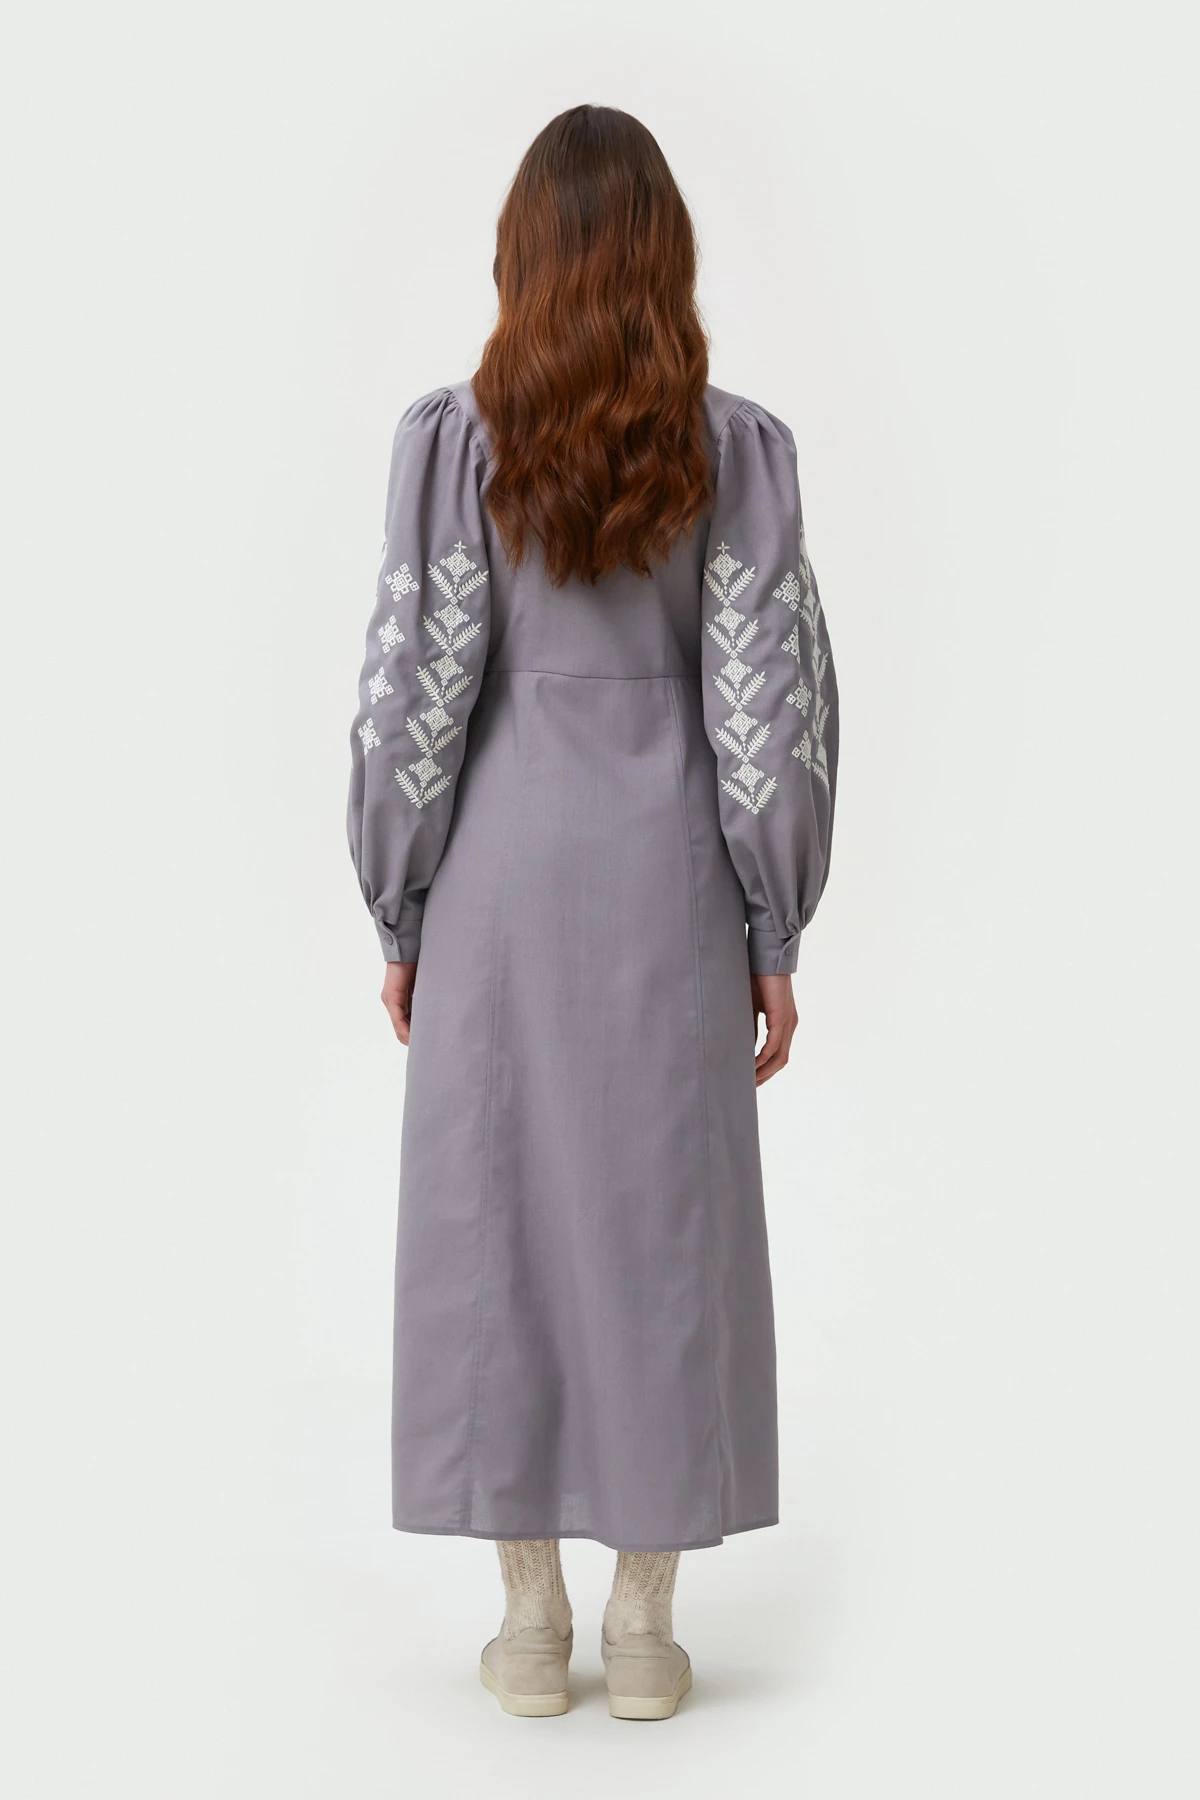 Grey linen vyshyvanka dress with rhombus embroidery, photo 6